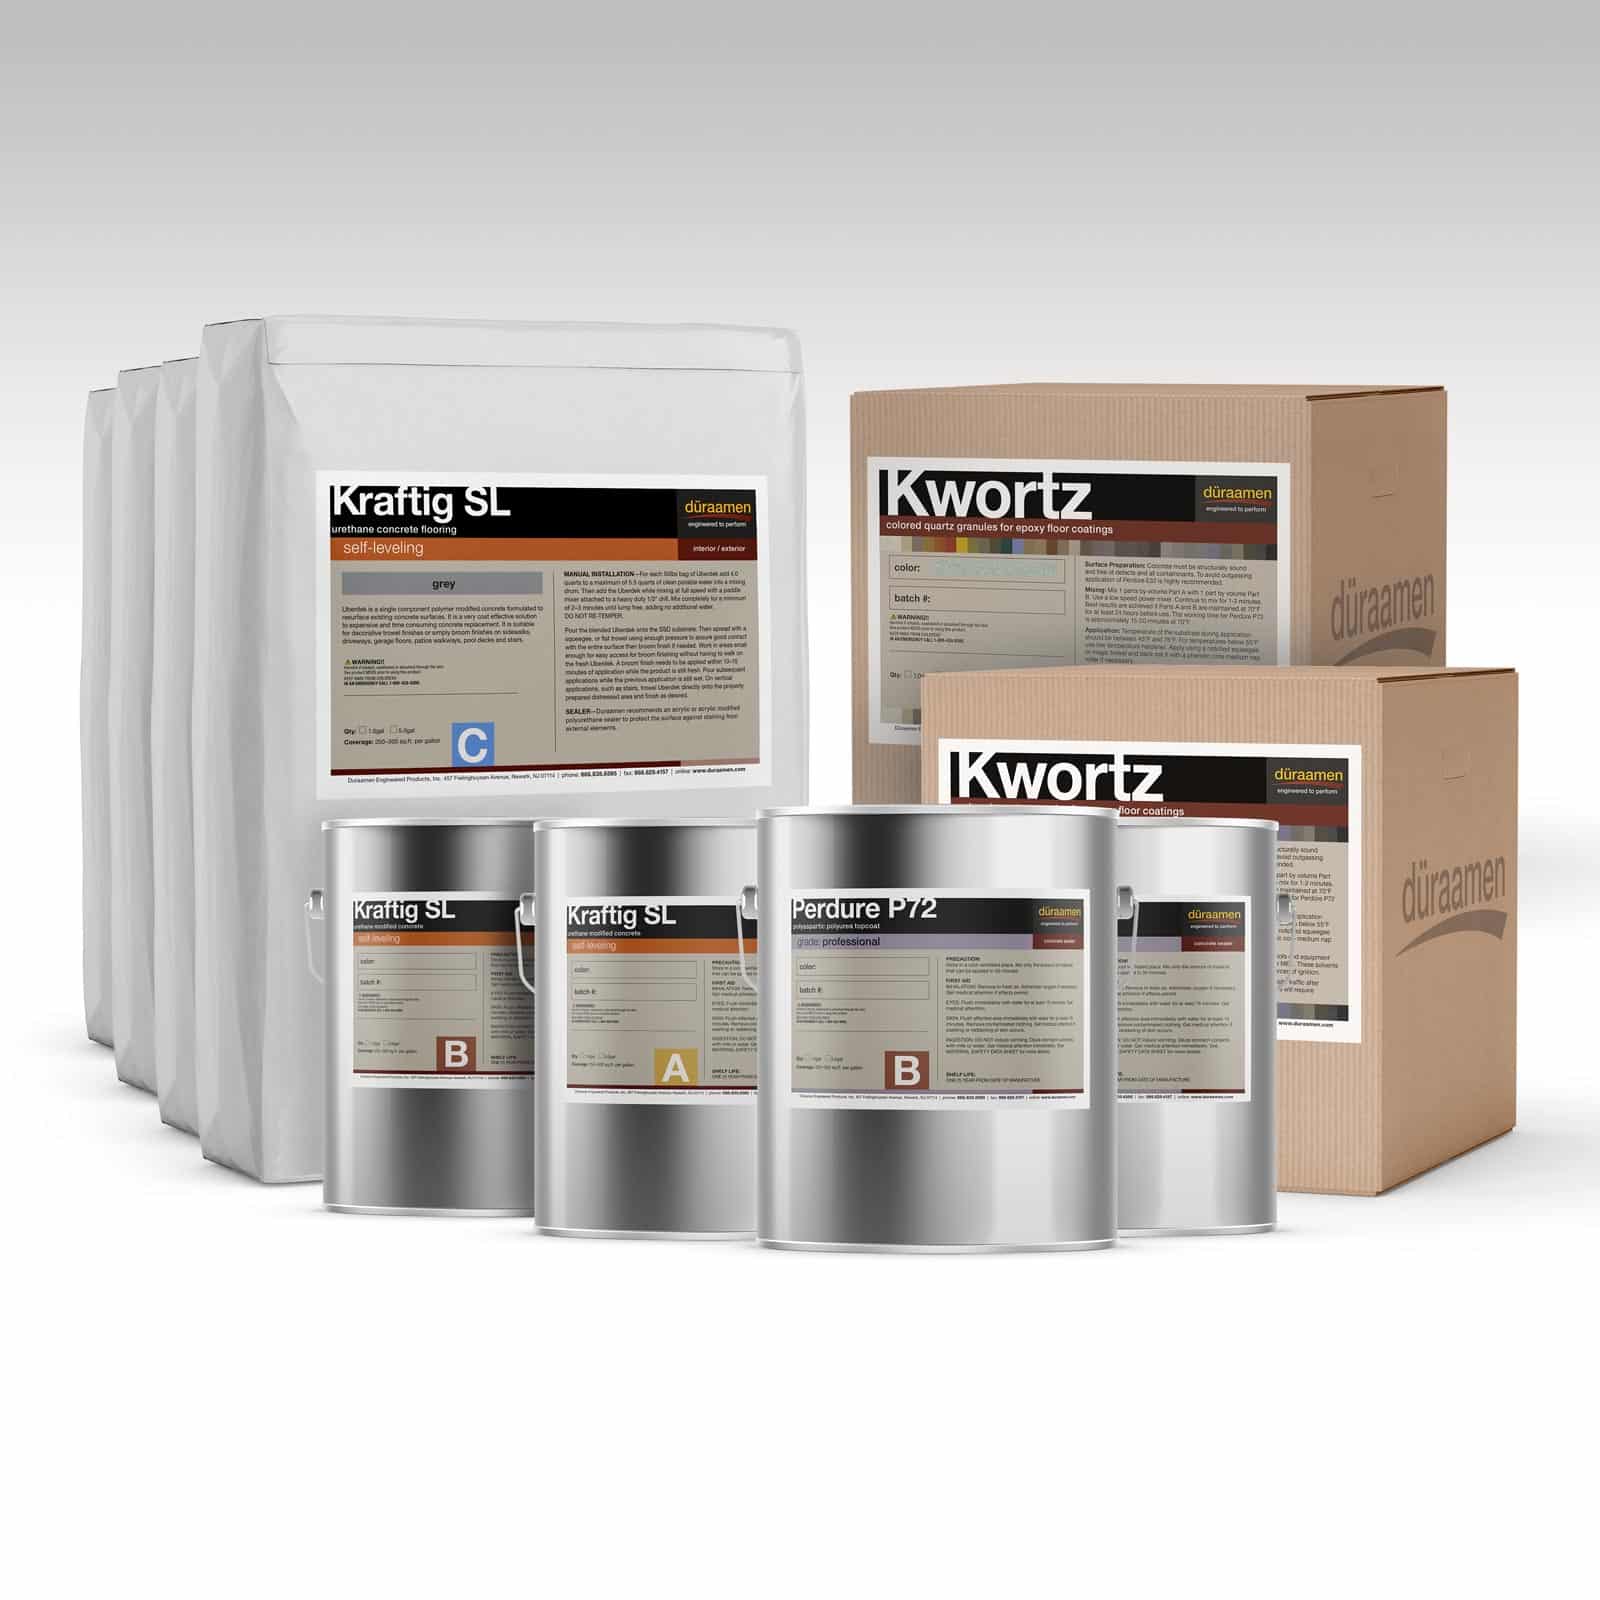 Kwortz quartz and UMC Floor coating System Kwortz UMC | Decorative Quartz Urethane Concrete Floor System by Duraamen | Duraamen Engineered Products Inc